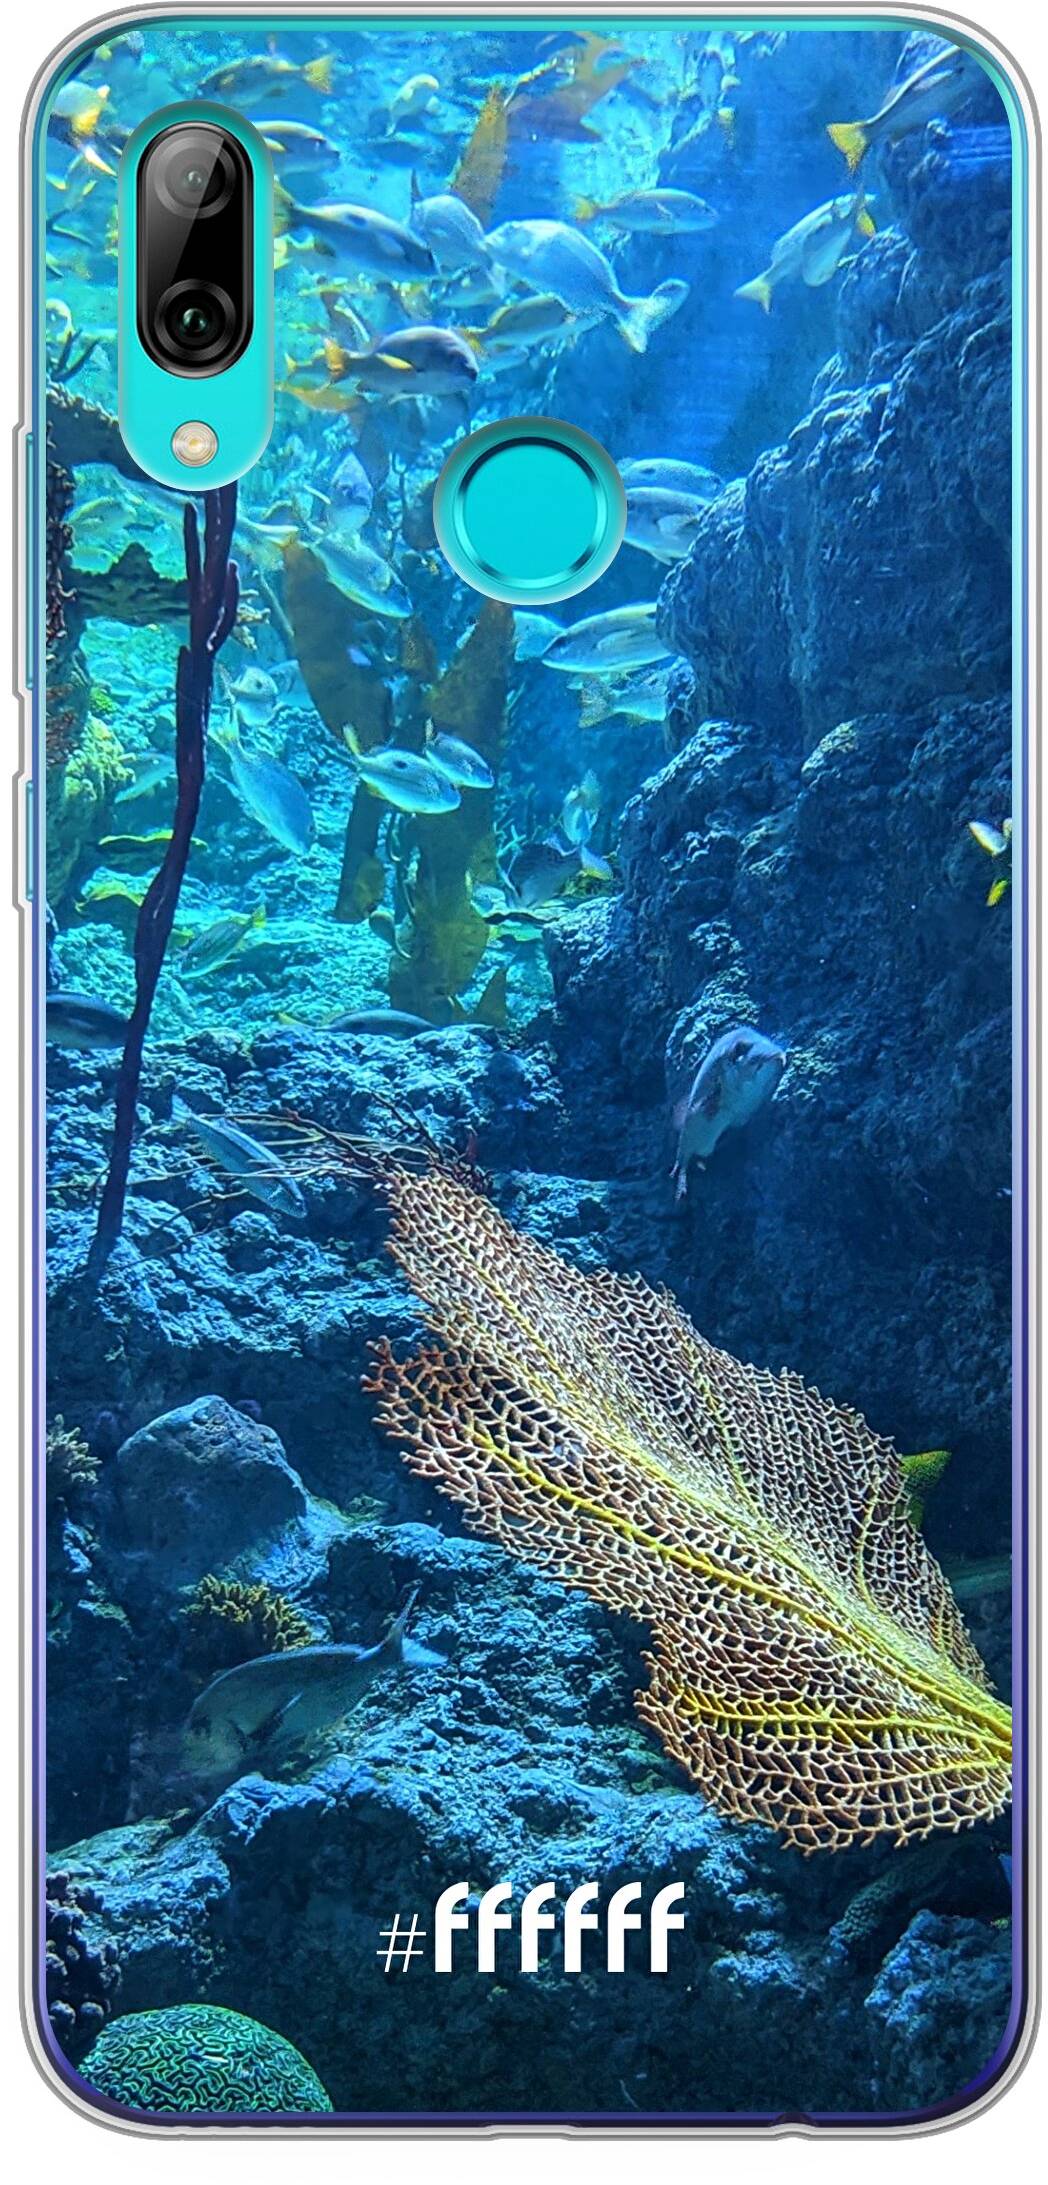 Coral Reef P Smart (2019)